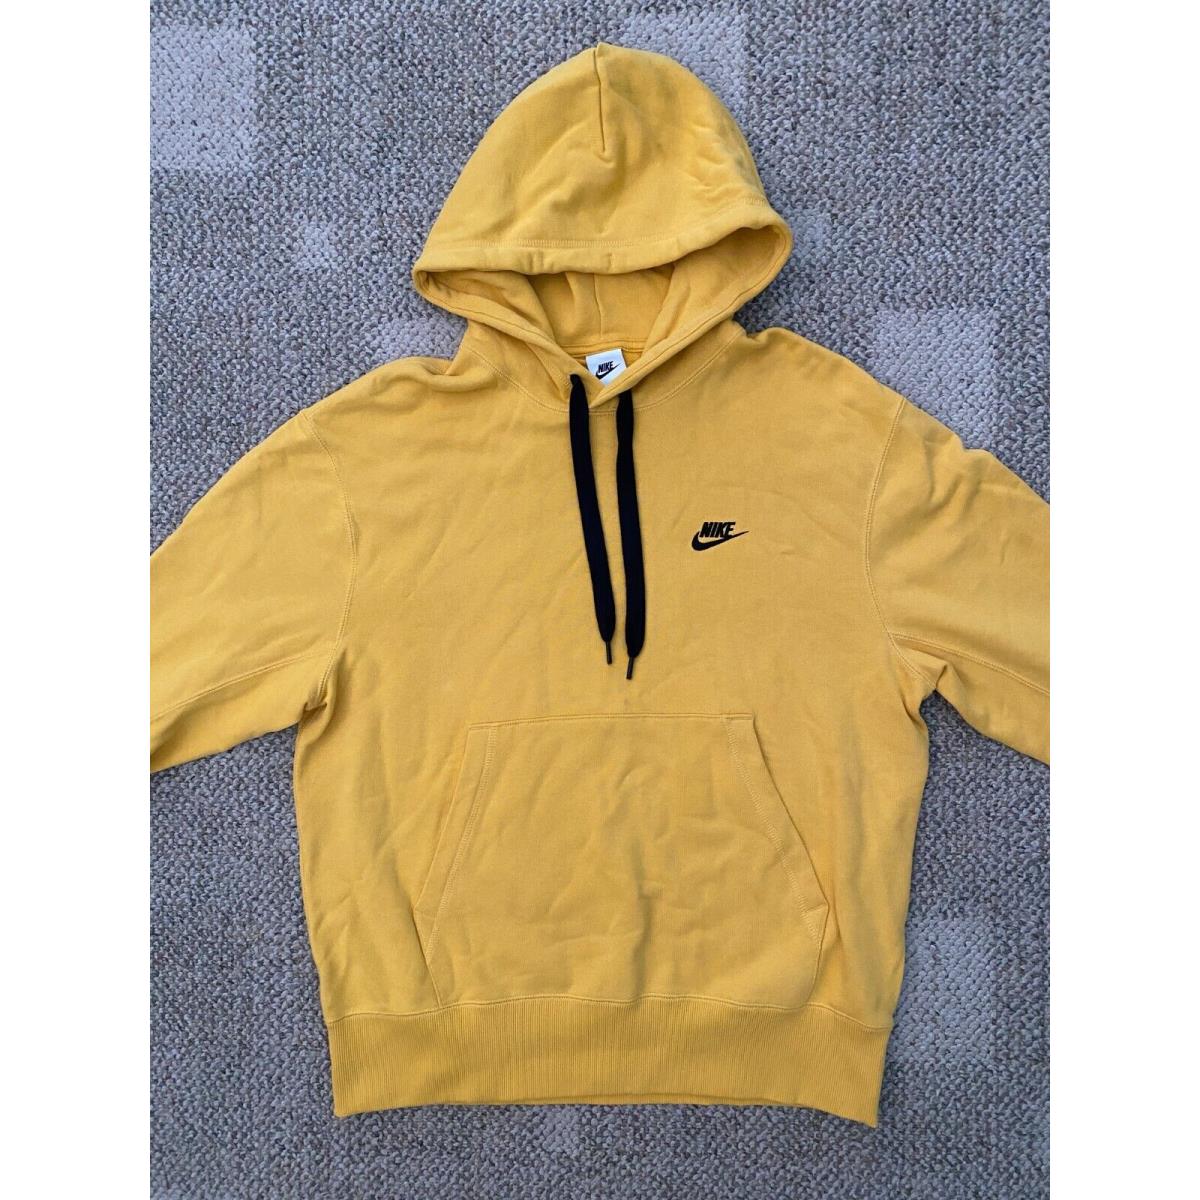 Nike clothing  - Pollen Yellow 1